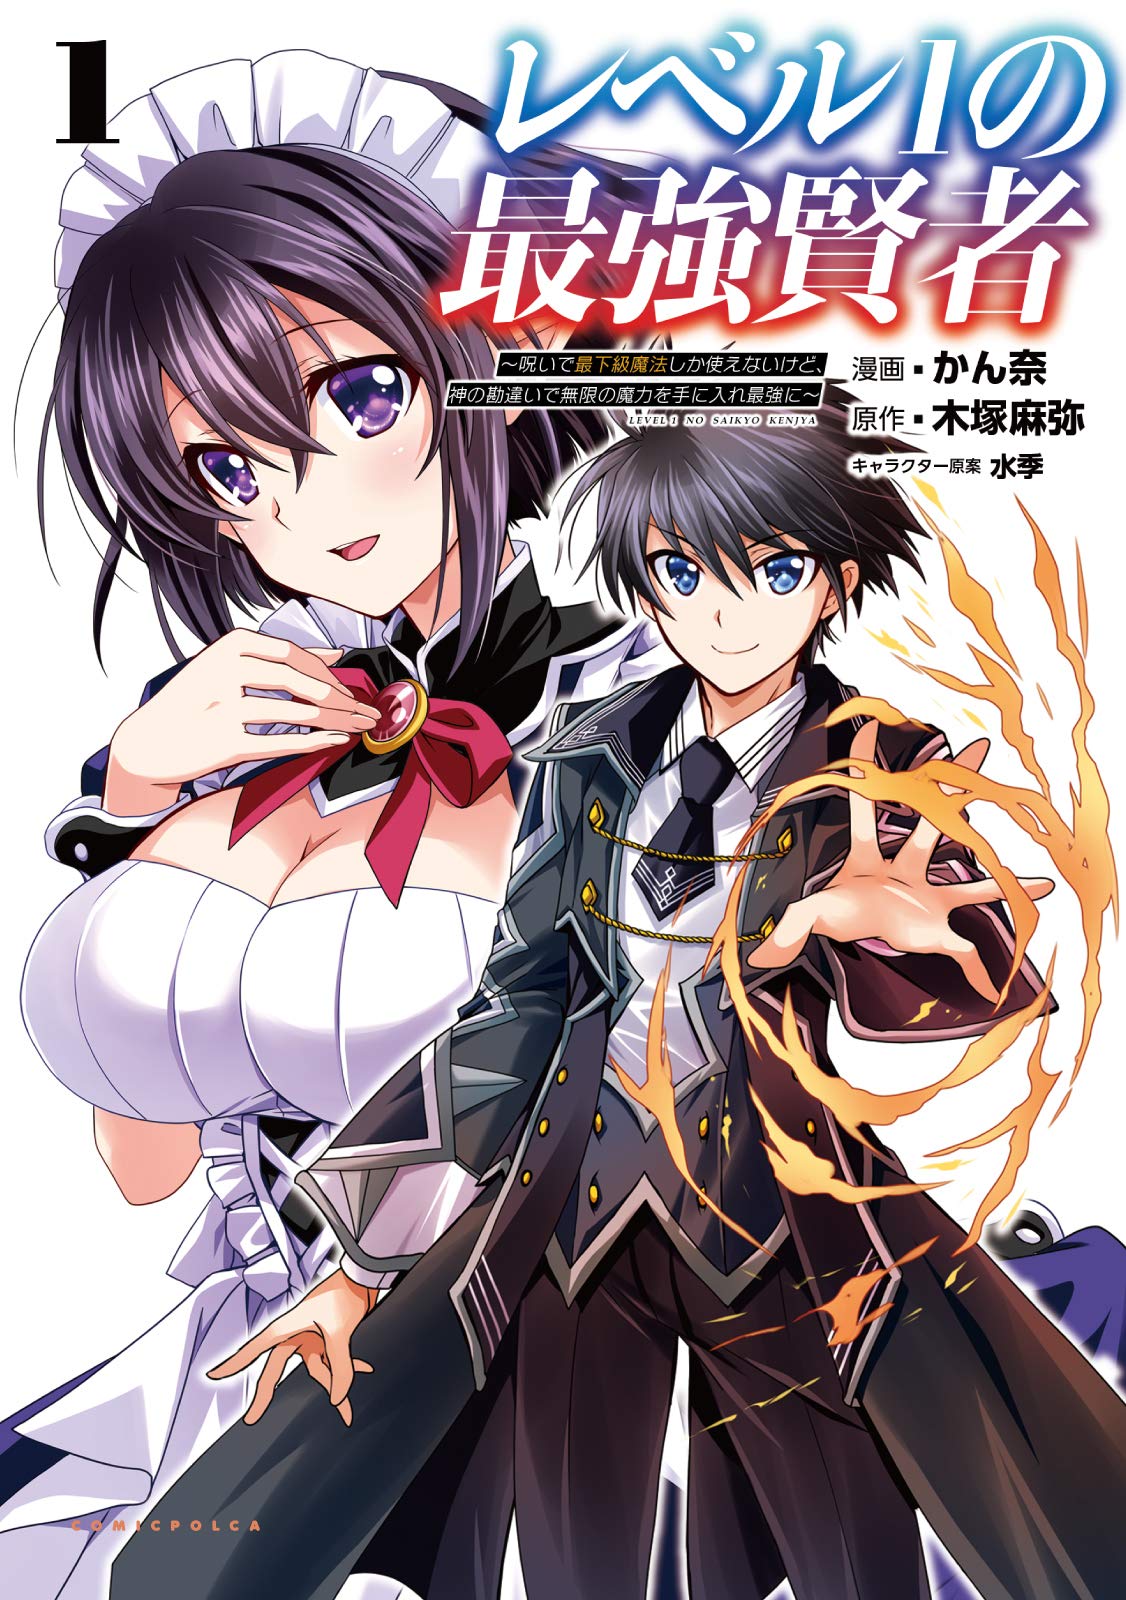 Read Manga Saikyou de Saisoku no Mugen Level Up - Chapter 6